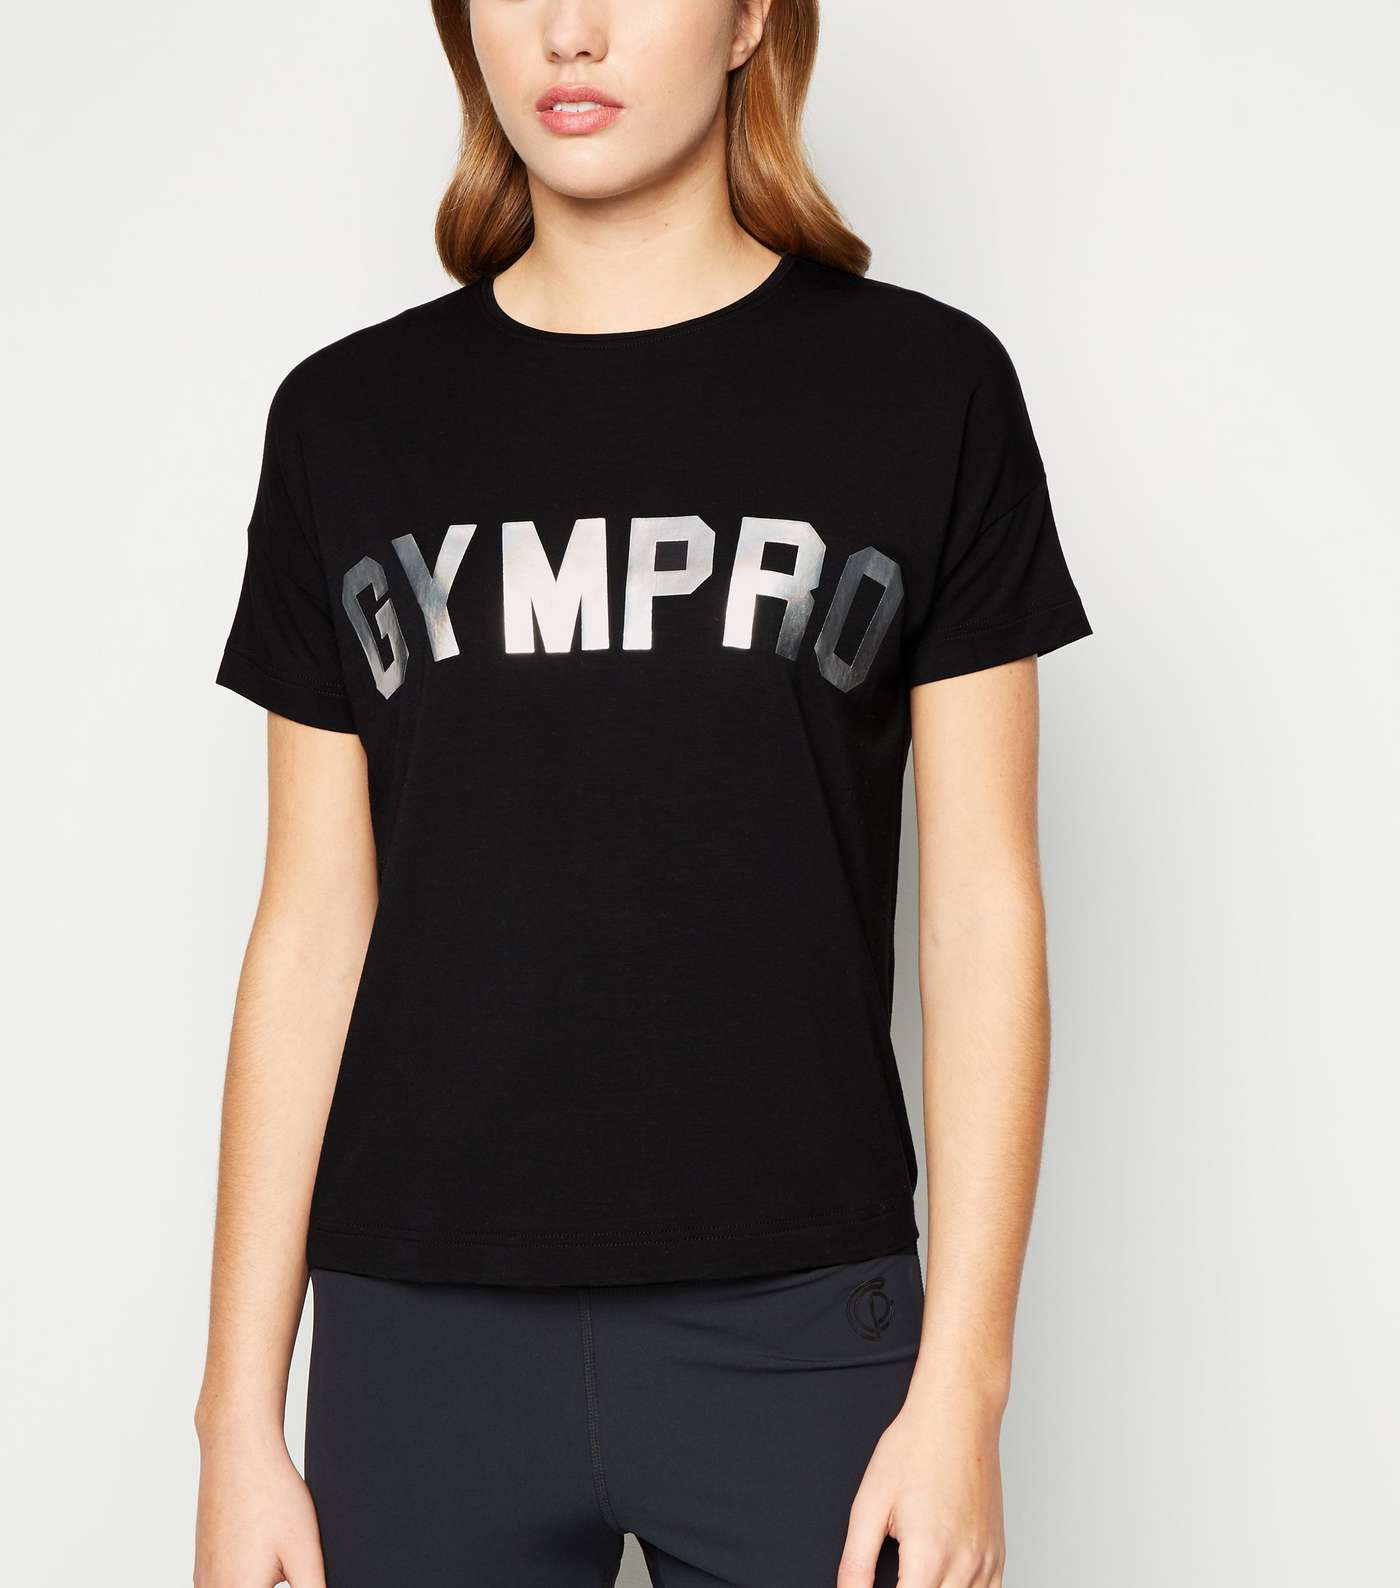 GymPro Black Cropped Slogan T-Shirt